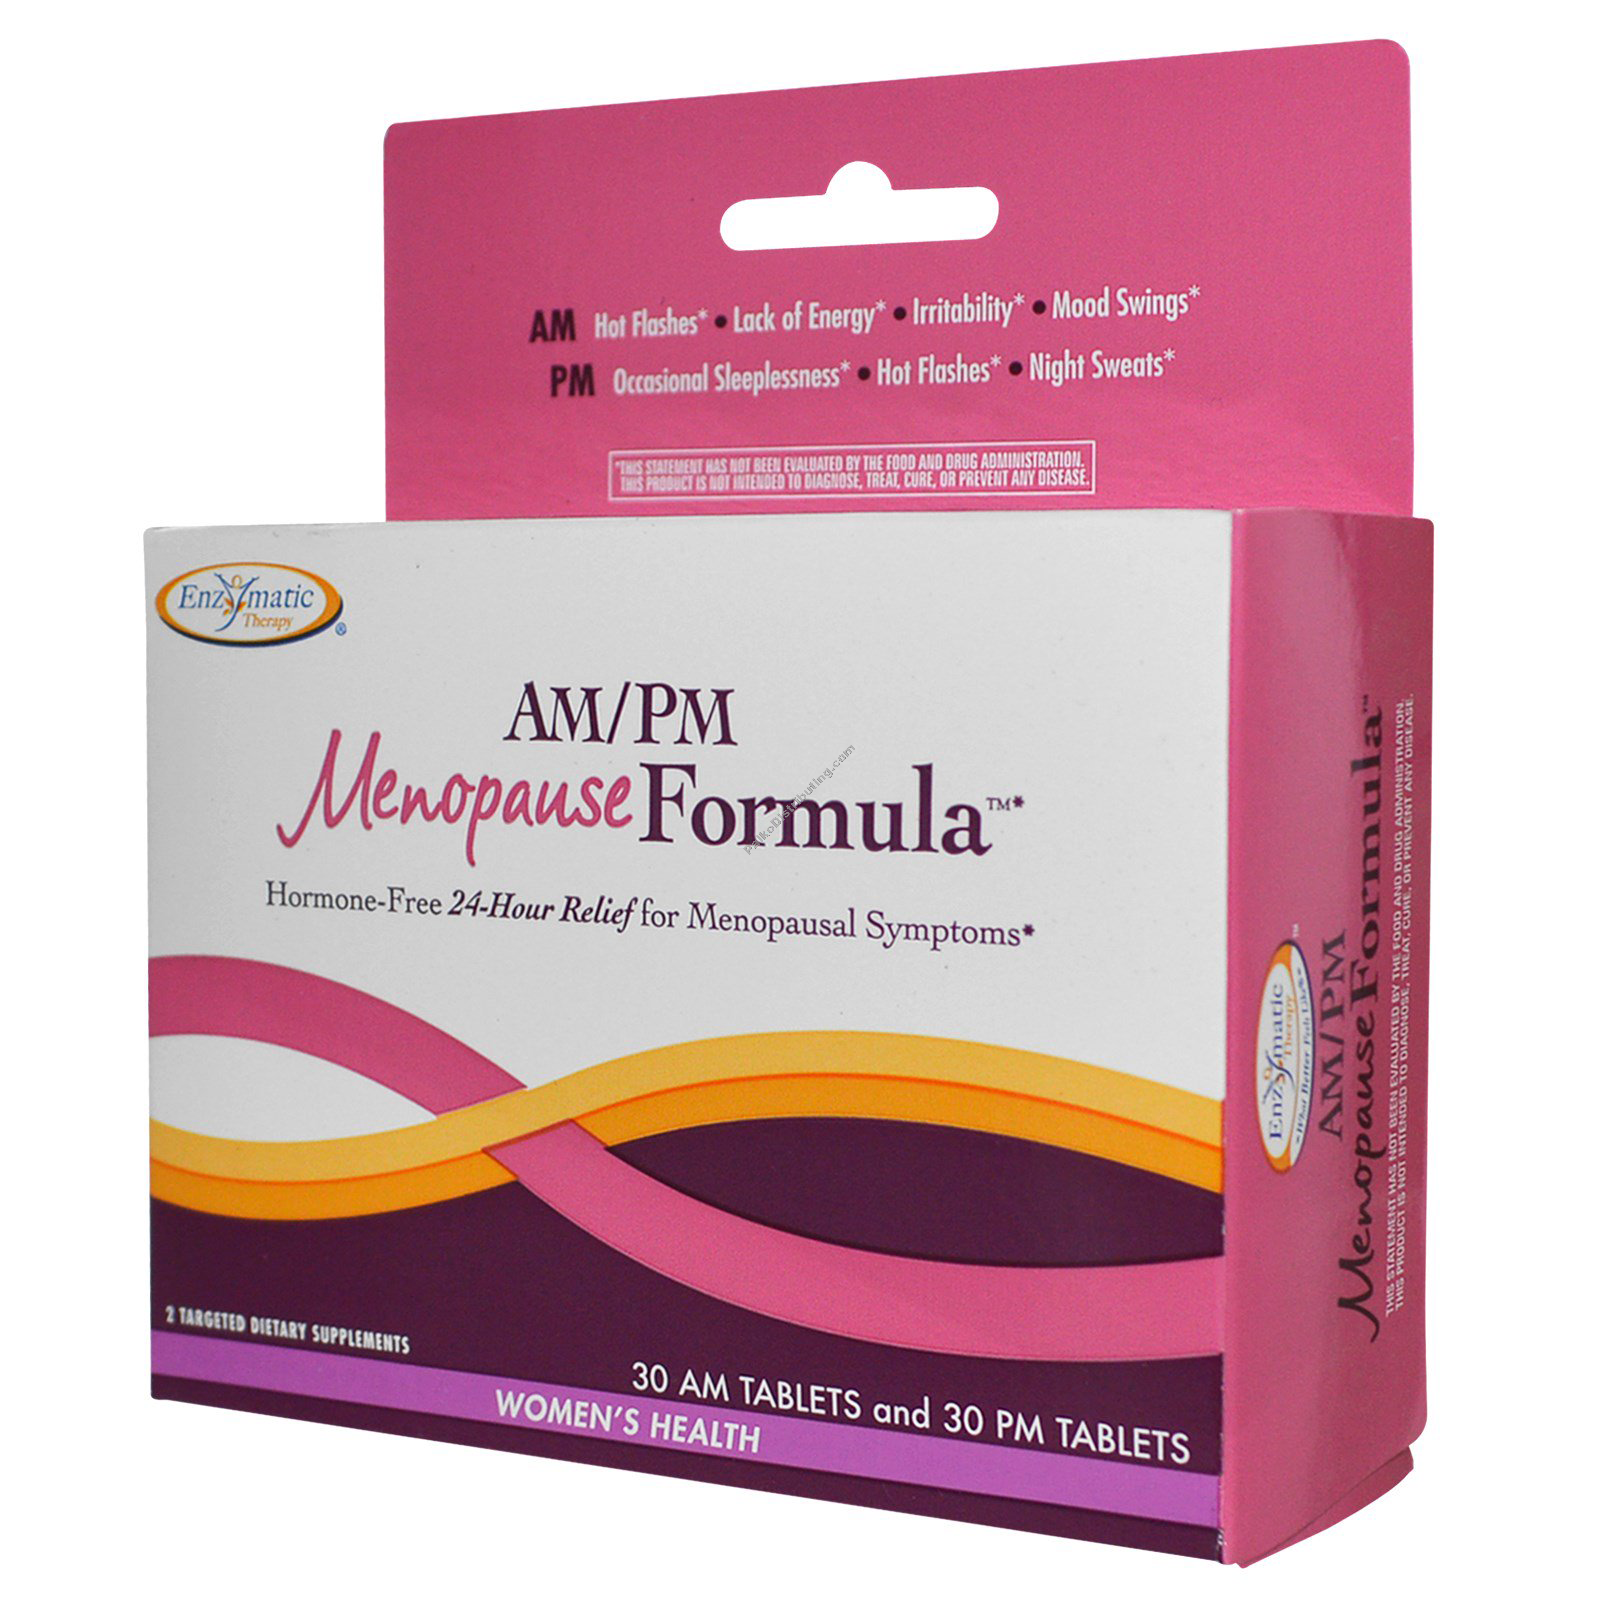 Product Image: AM/PM Menopause Formula